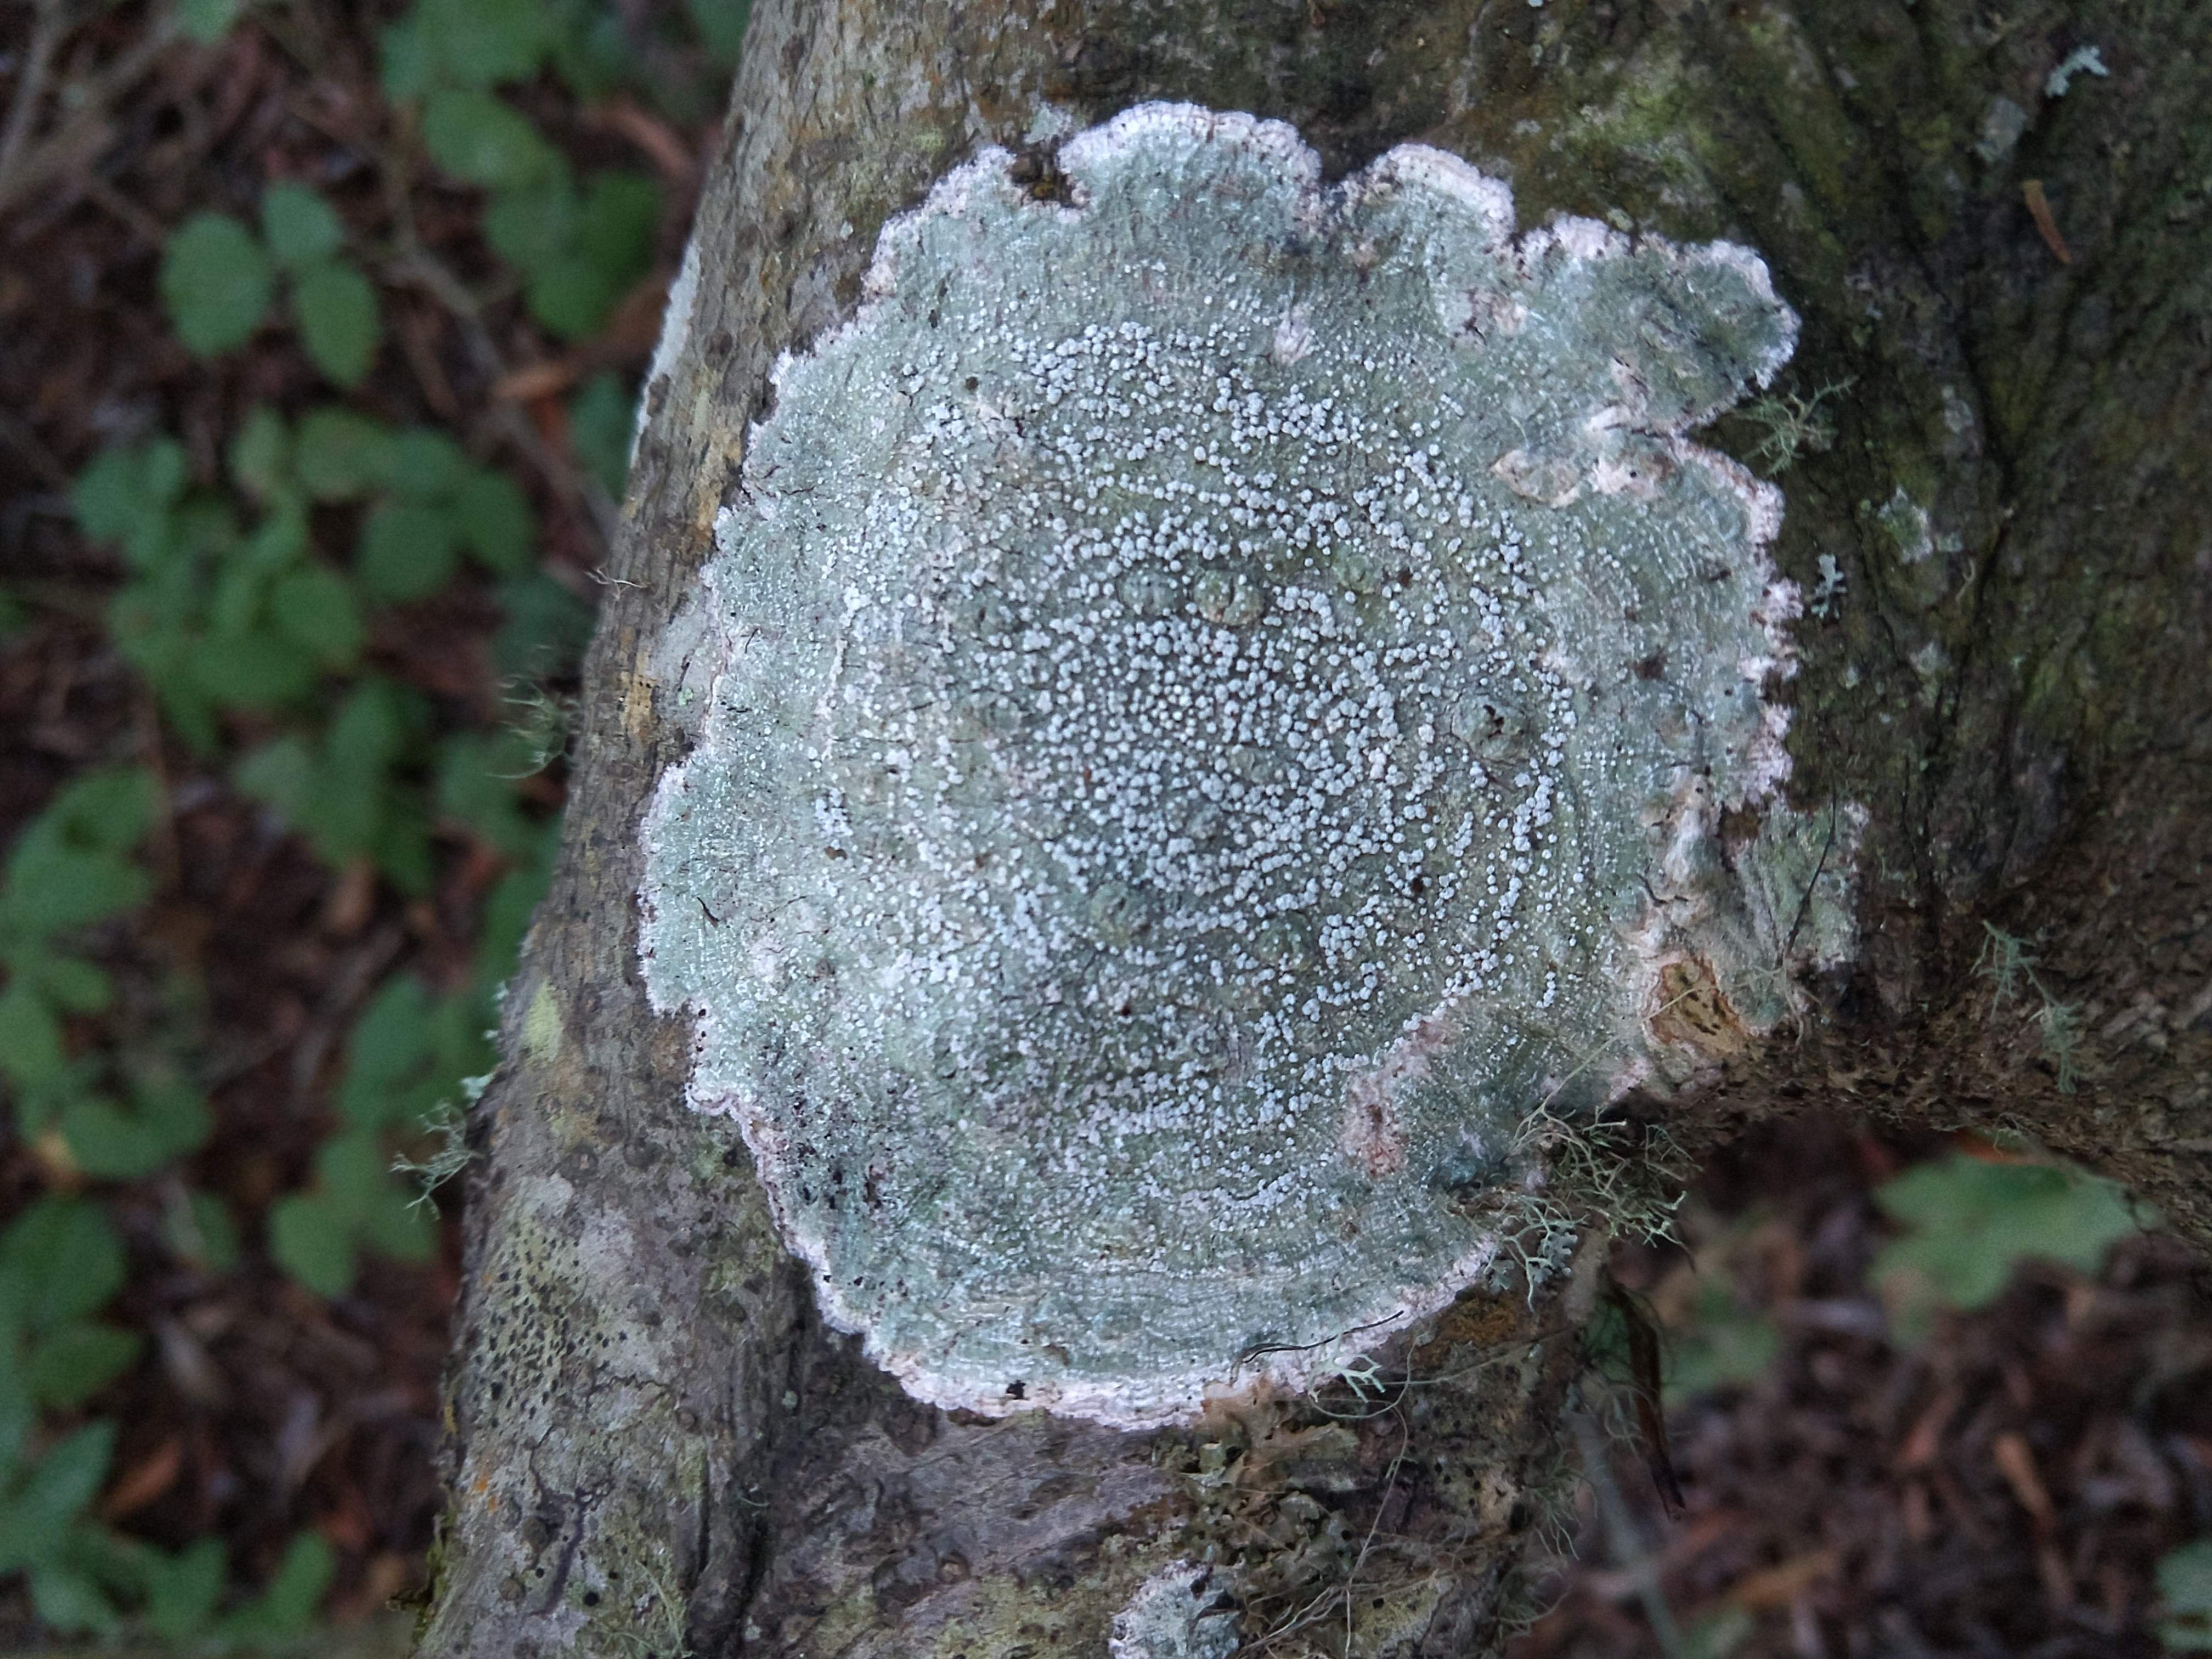 A crustose lichen growing on wax myrtle bark